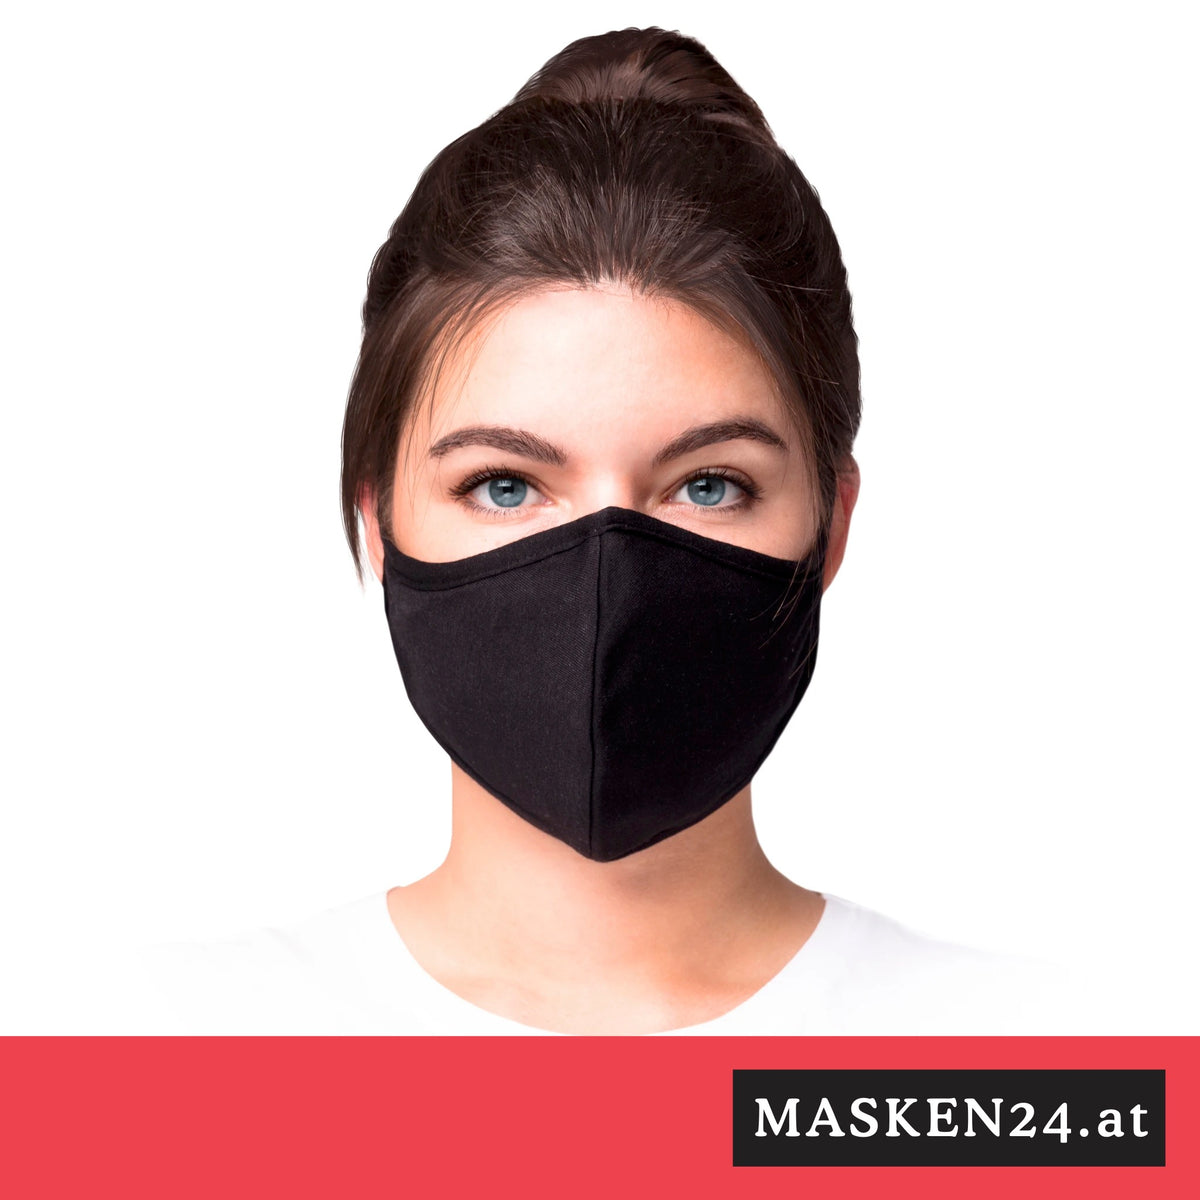 masken24.at